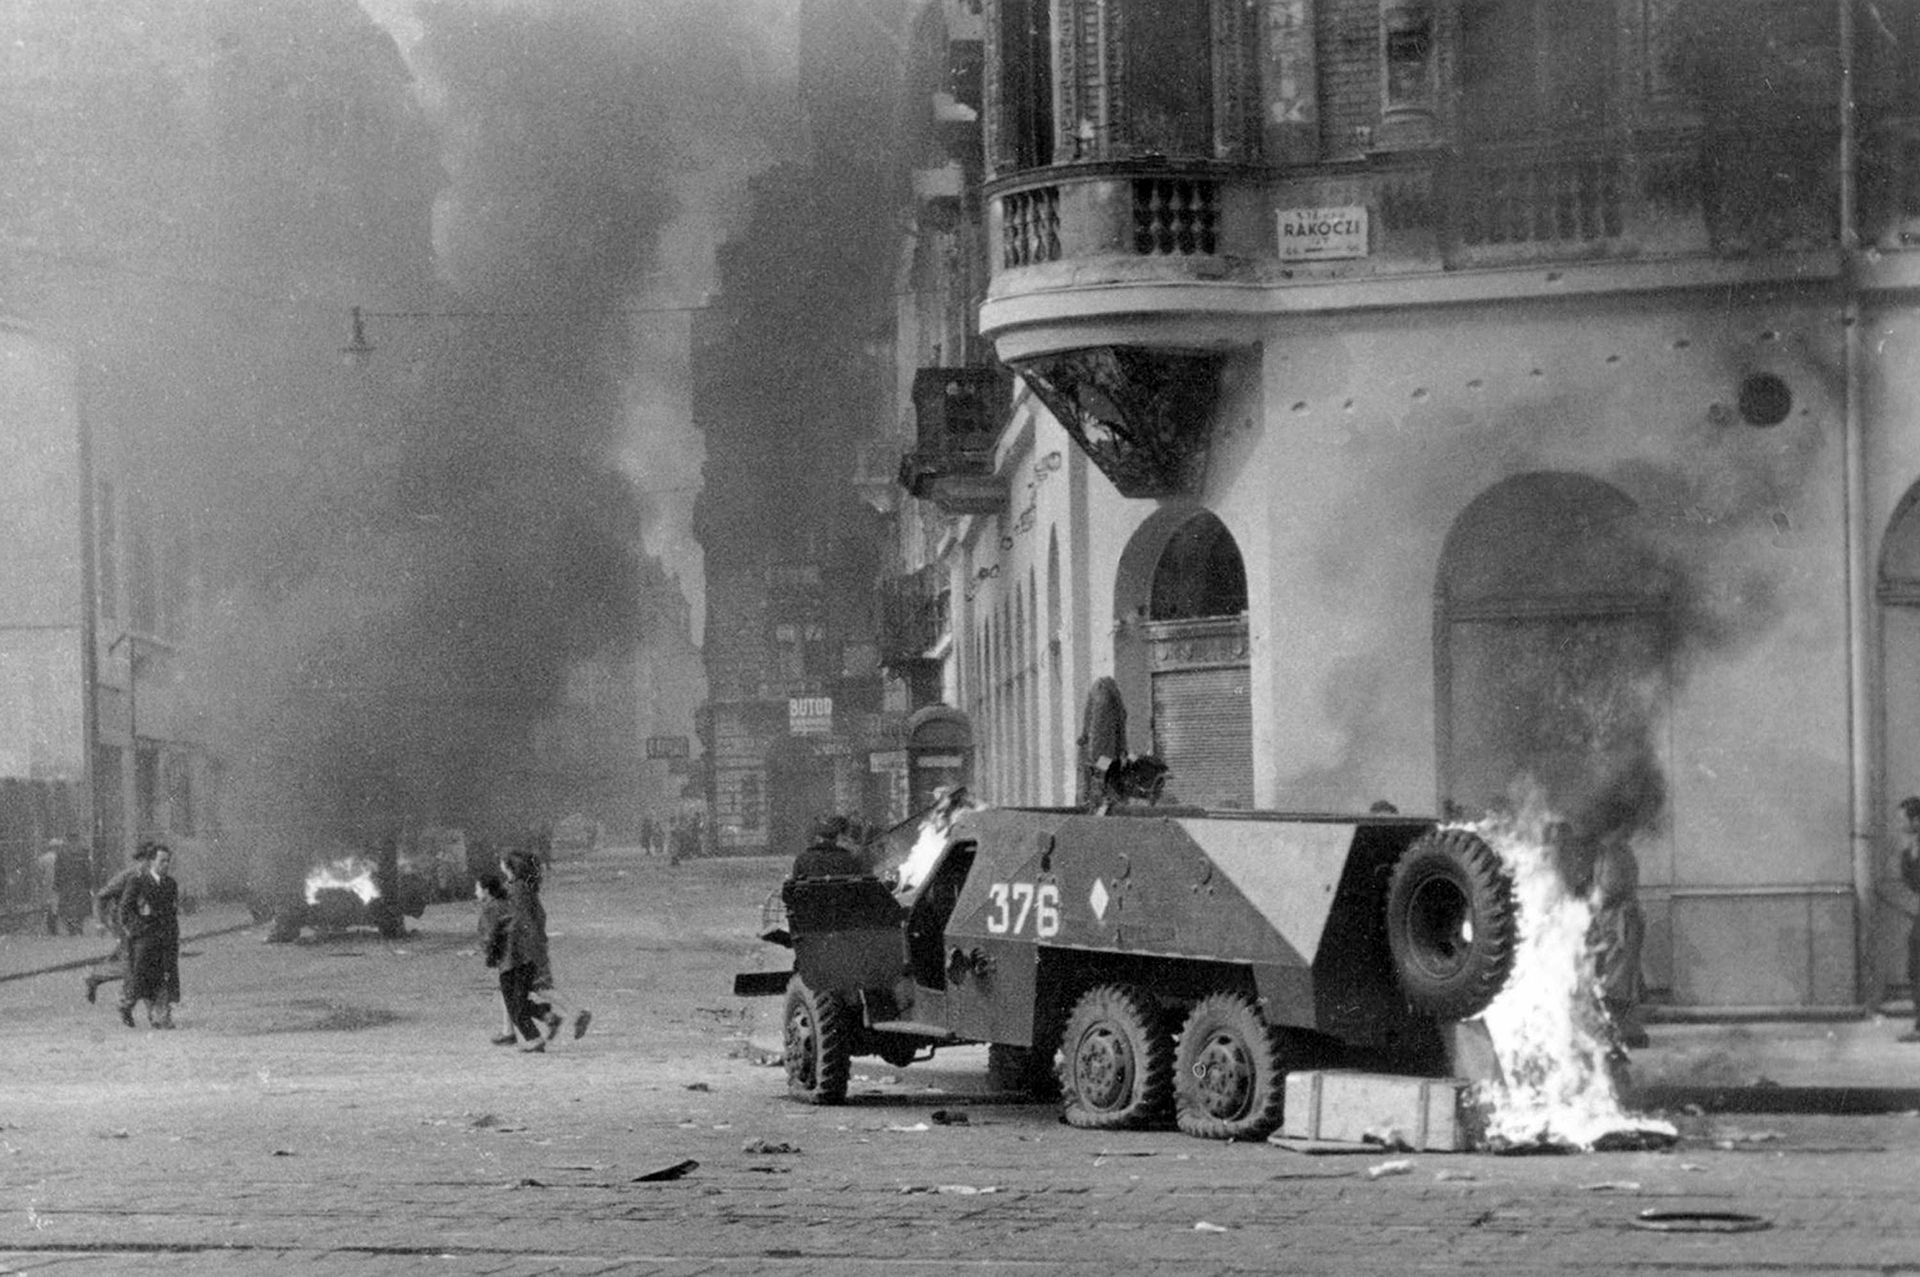 History of Hungary - Communist Era and the 1956 Hungarian Revolution